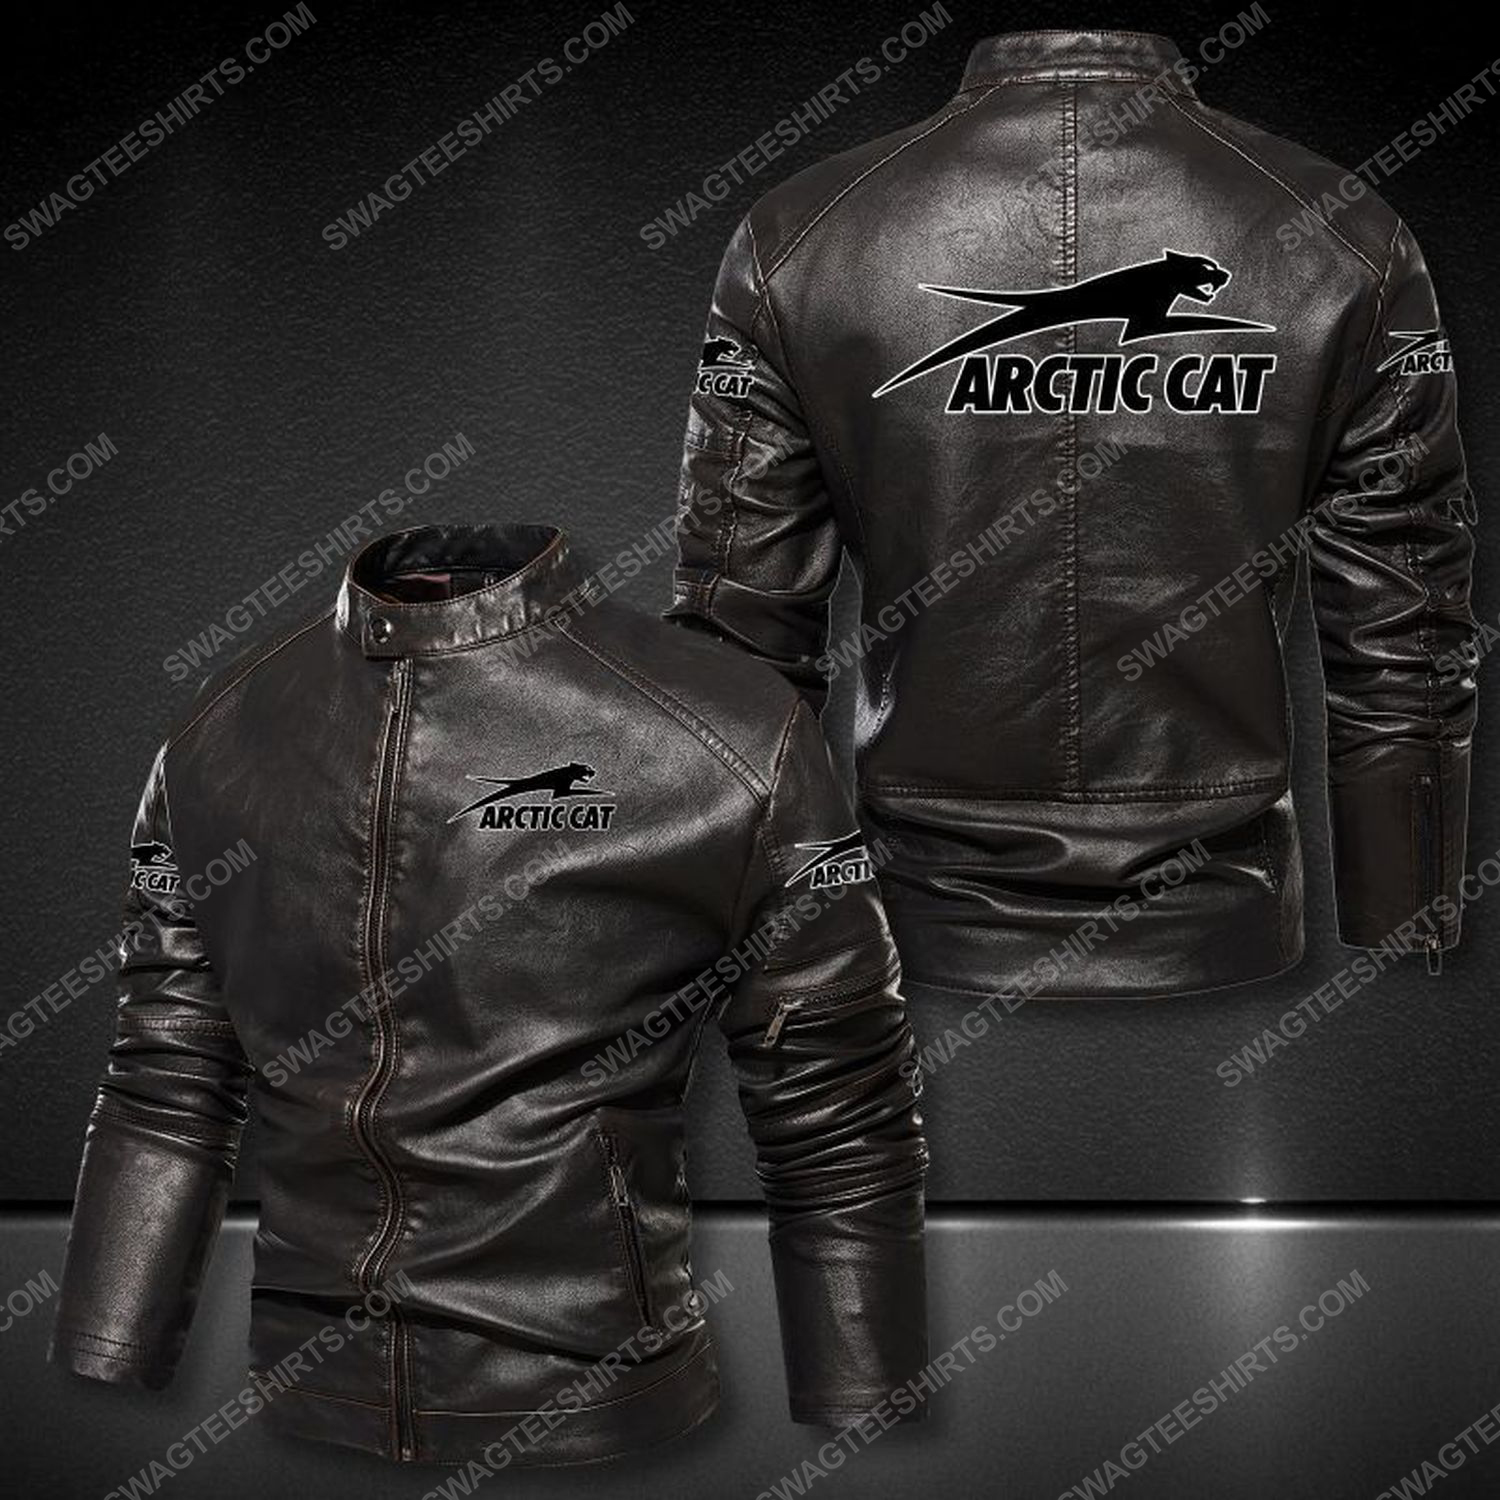 Arctic cat snowmobile sport leather jacket 1 - Copy